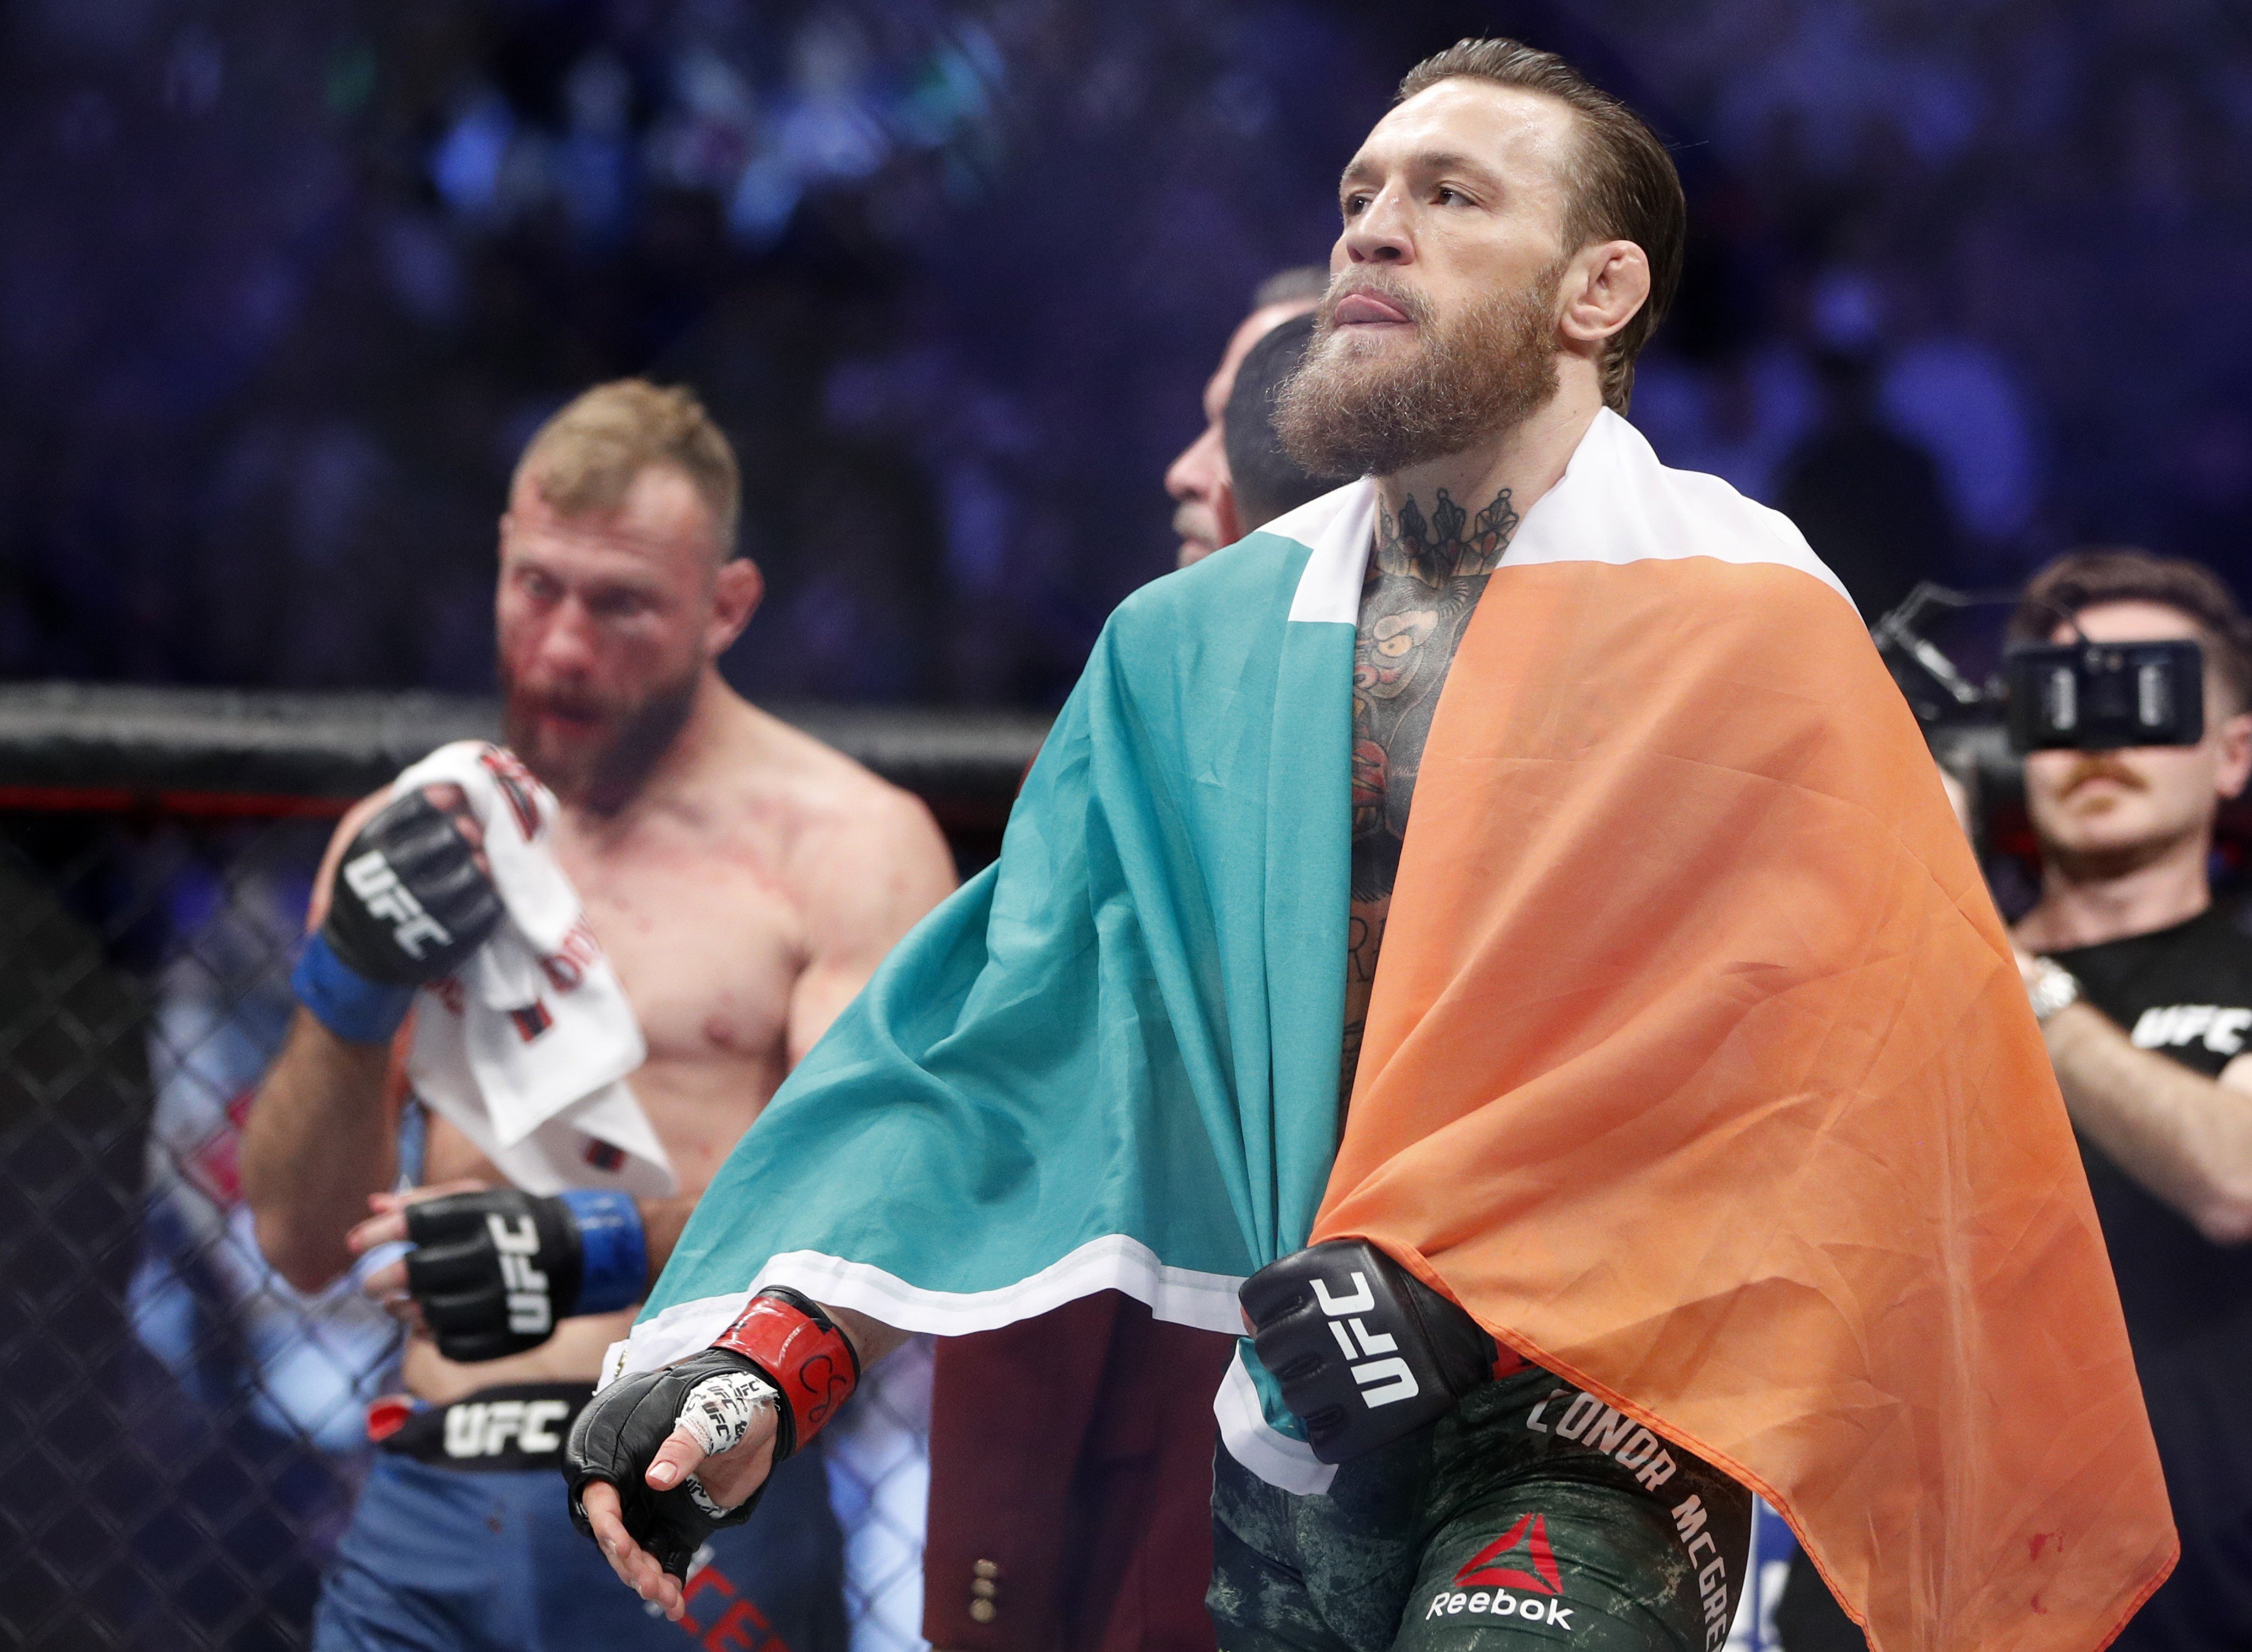 Conor McGregor (right) defeats Donald Cerrone in his mixed martial arts comeback at UFC 246. Photo: AP